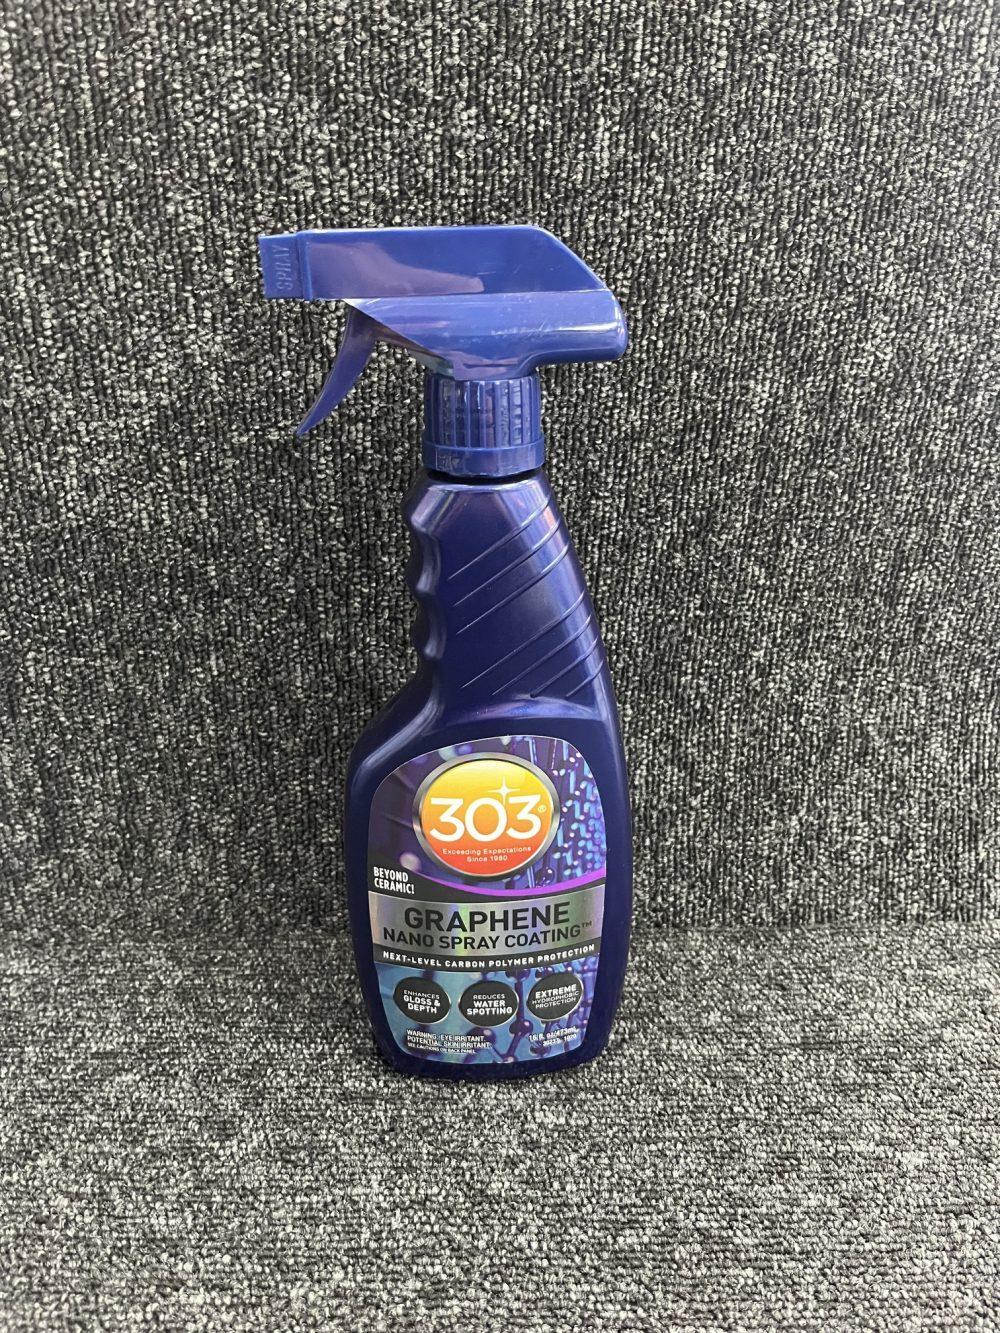 303 Graphene Nano Spray Coating - Next Level Carbon Polymer Protection,  Enhances Gloss and Depth, Extreme Hydrophobic Protection, Beyond Ceramic